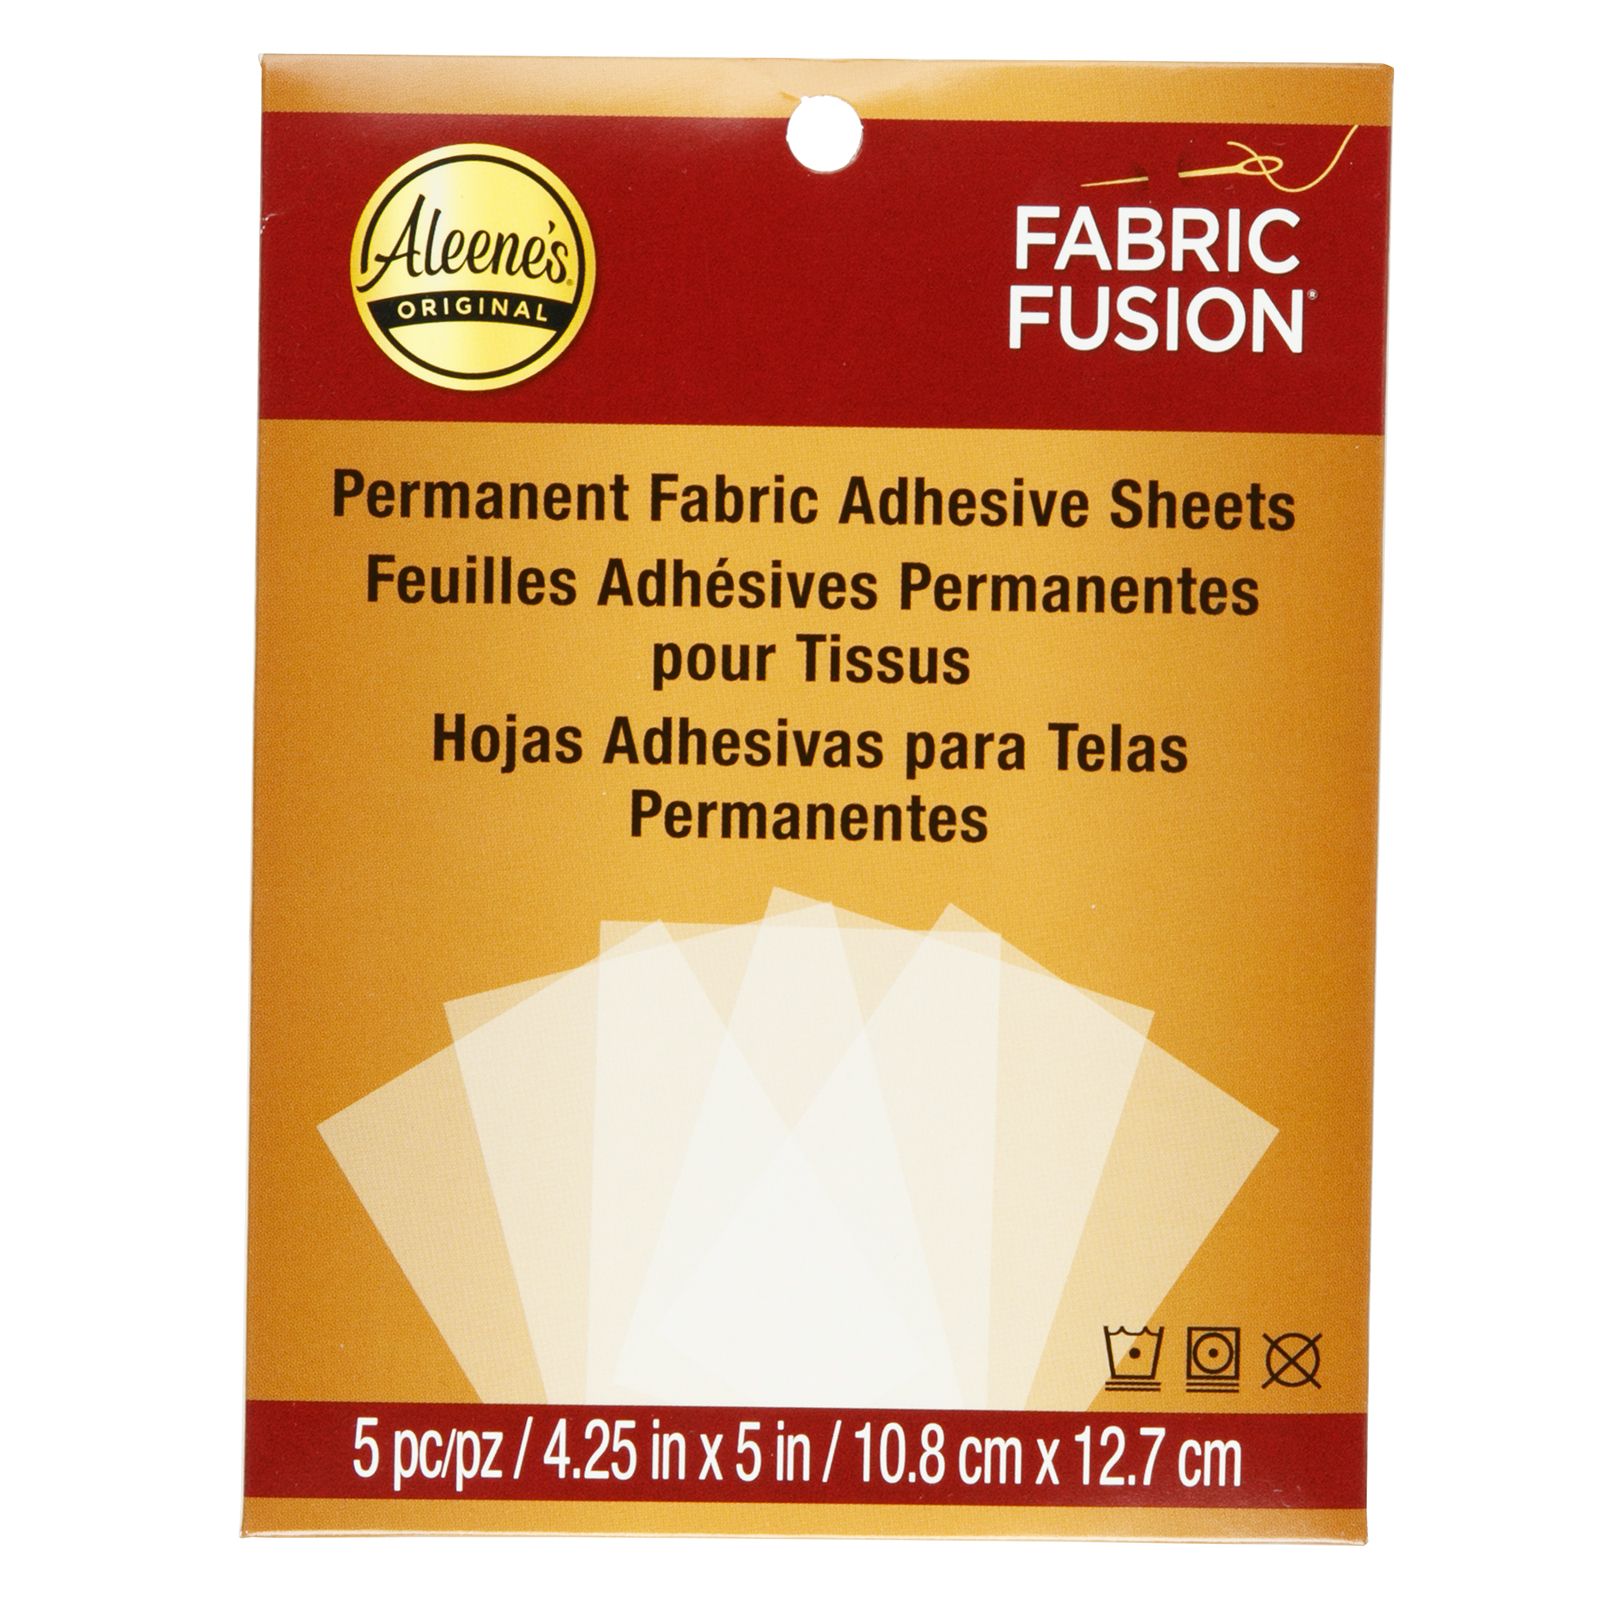 Aleene's • Fabric Fusion Permanent fabric adhesive sheets 5pcs